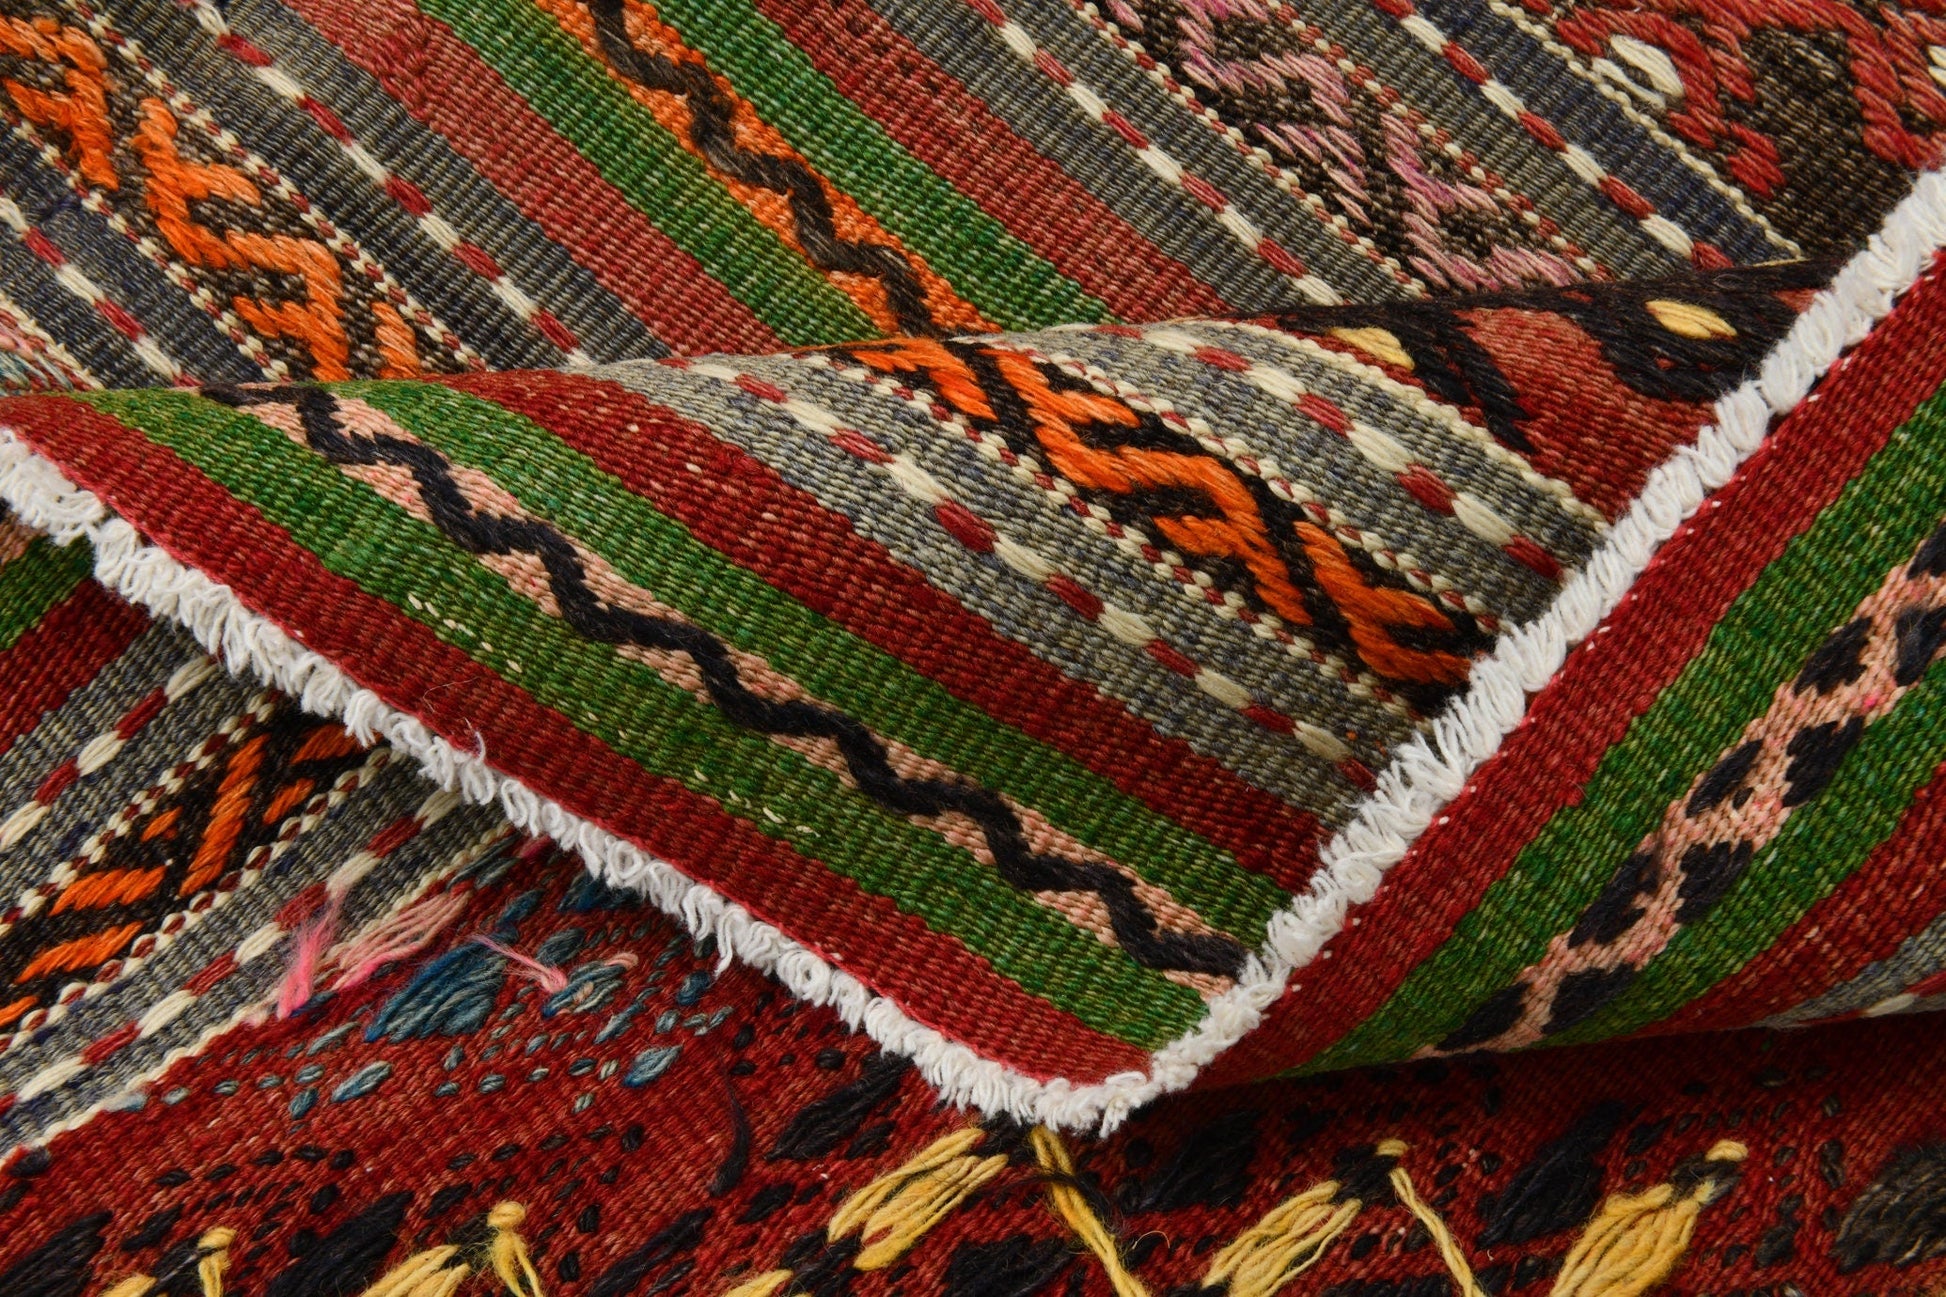 5’ x 10’ Turkish Kilim Old Rug - 1500 - Zengoda Shop online from Artisan Brands